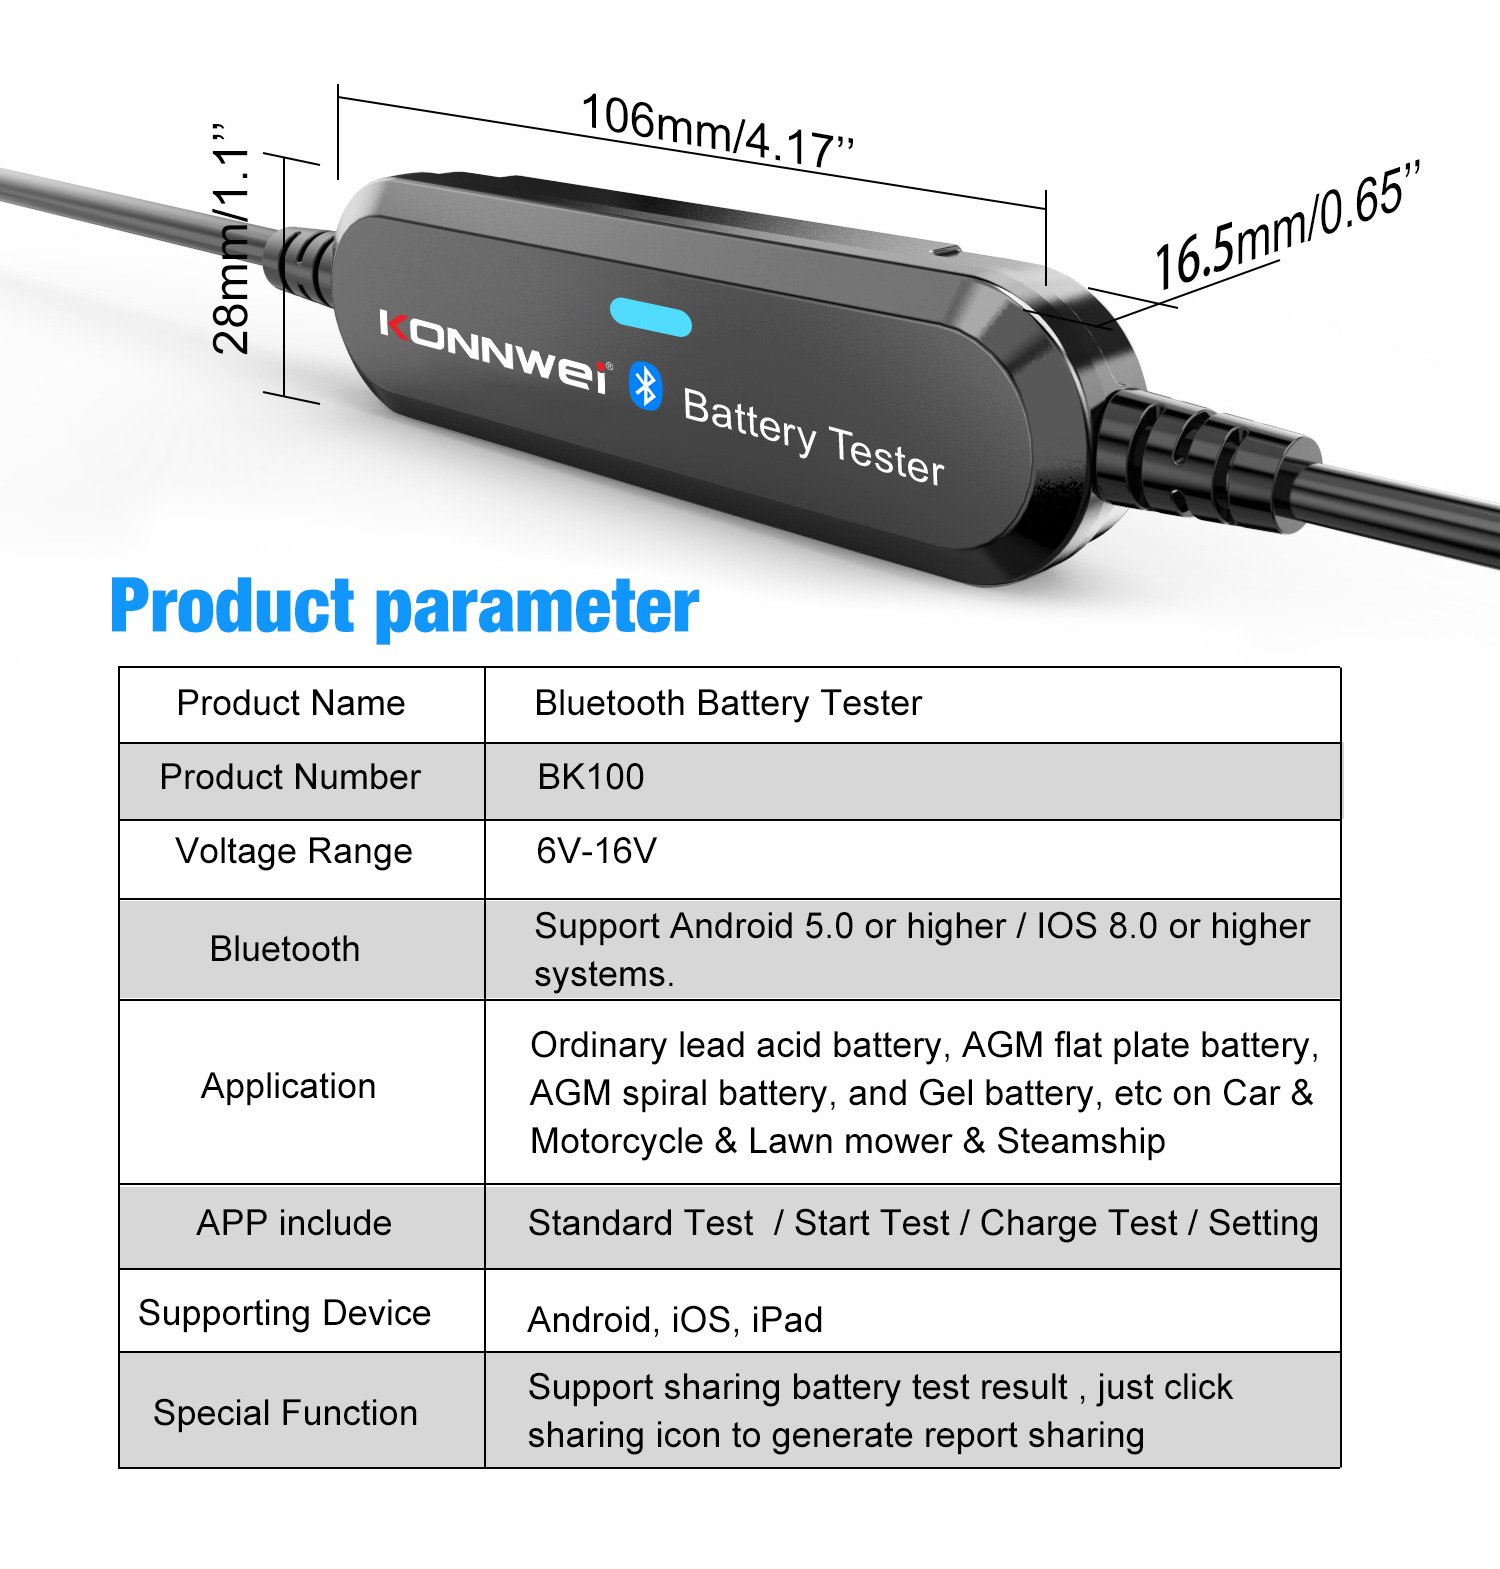 Tester baterii z funkcją Bluetooth Konnwei BK100